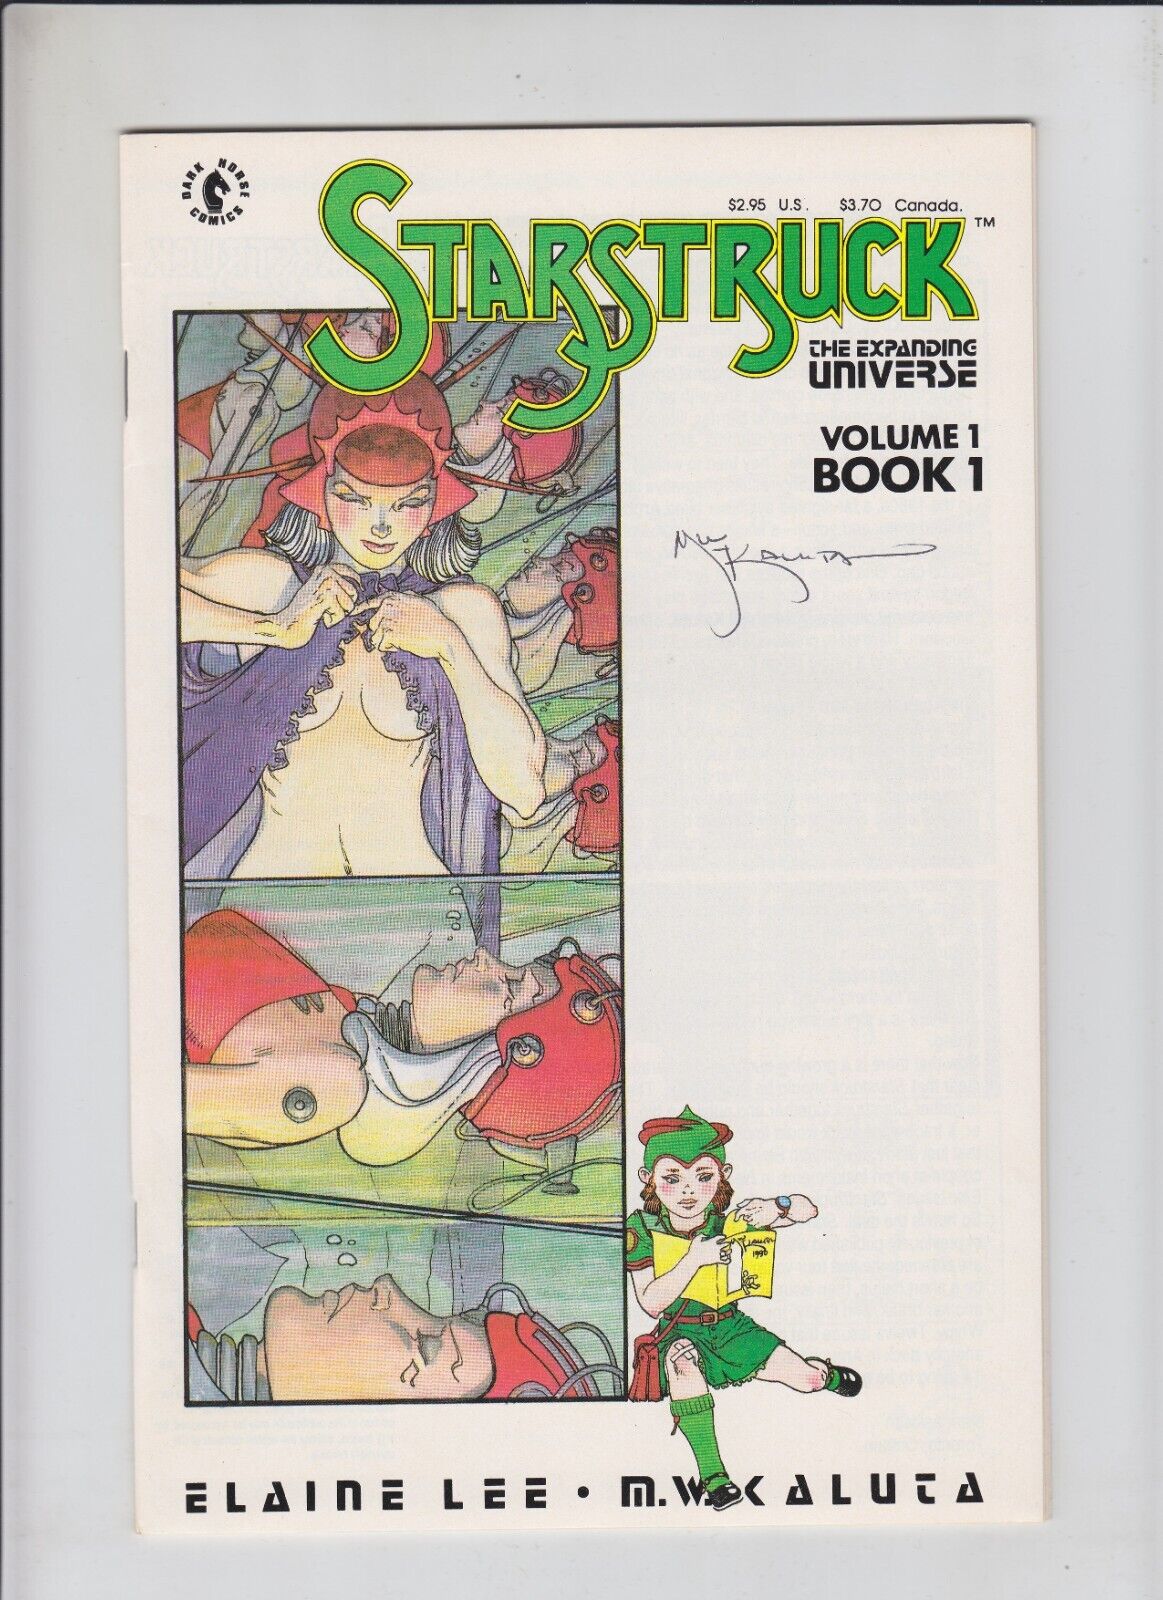 Starstruck #1 VF/NM SIGNED by Mike Kaluta - Dark Horse Comics - Elaine Lee